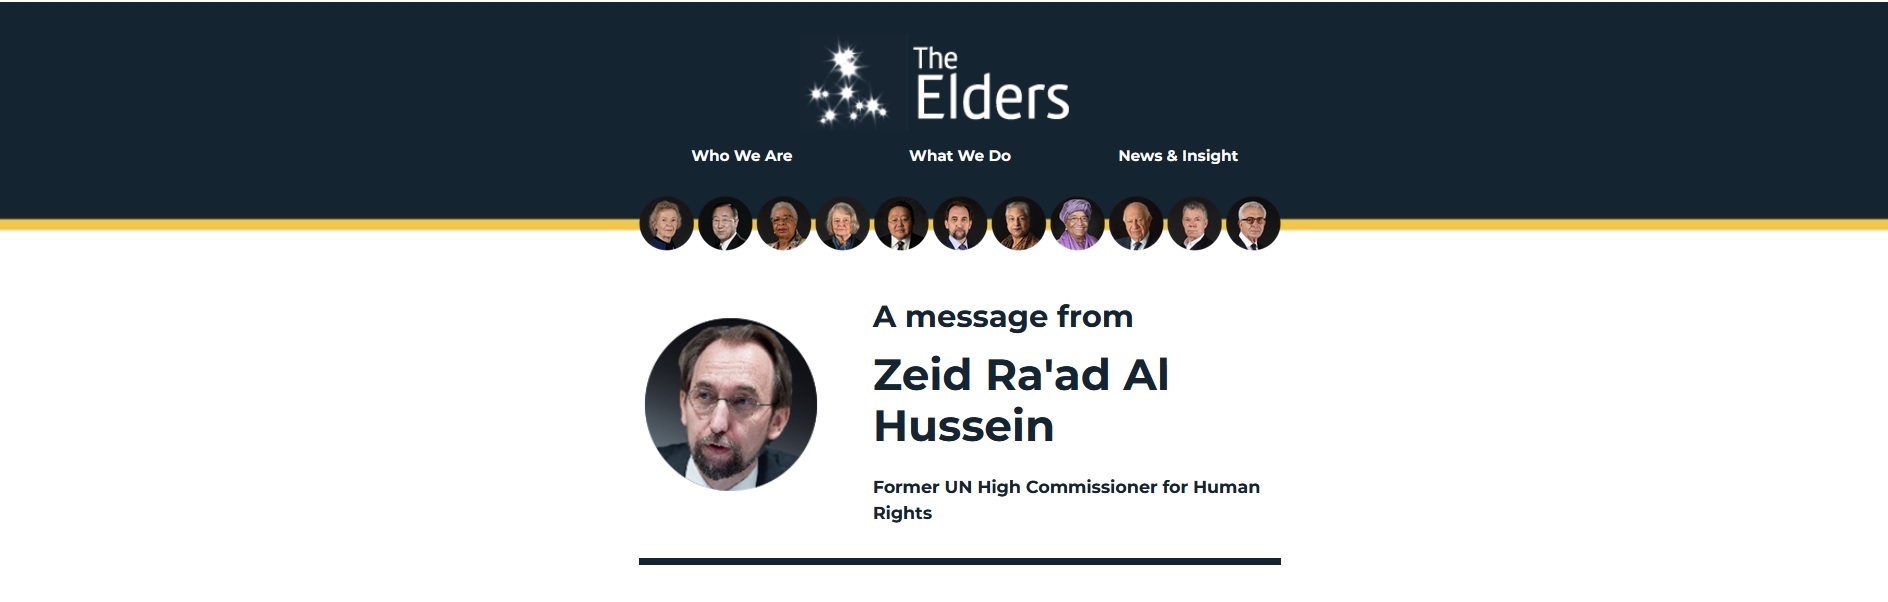 A message from The Elders – Zeid Ra’ad Al Hussein